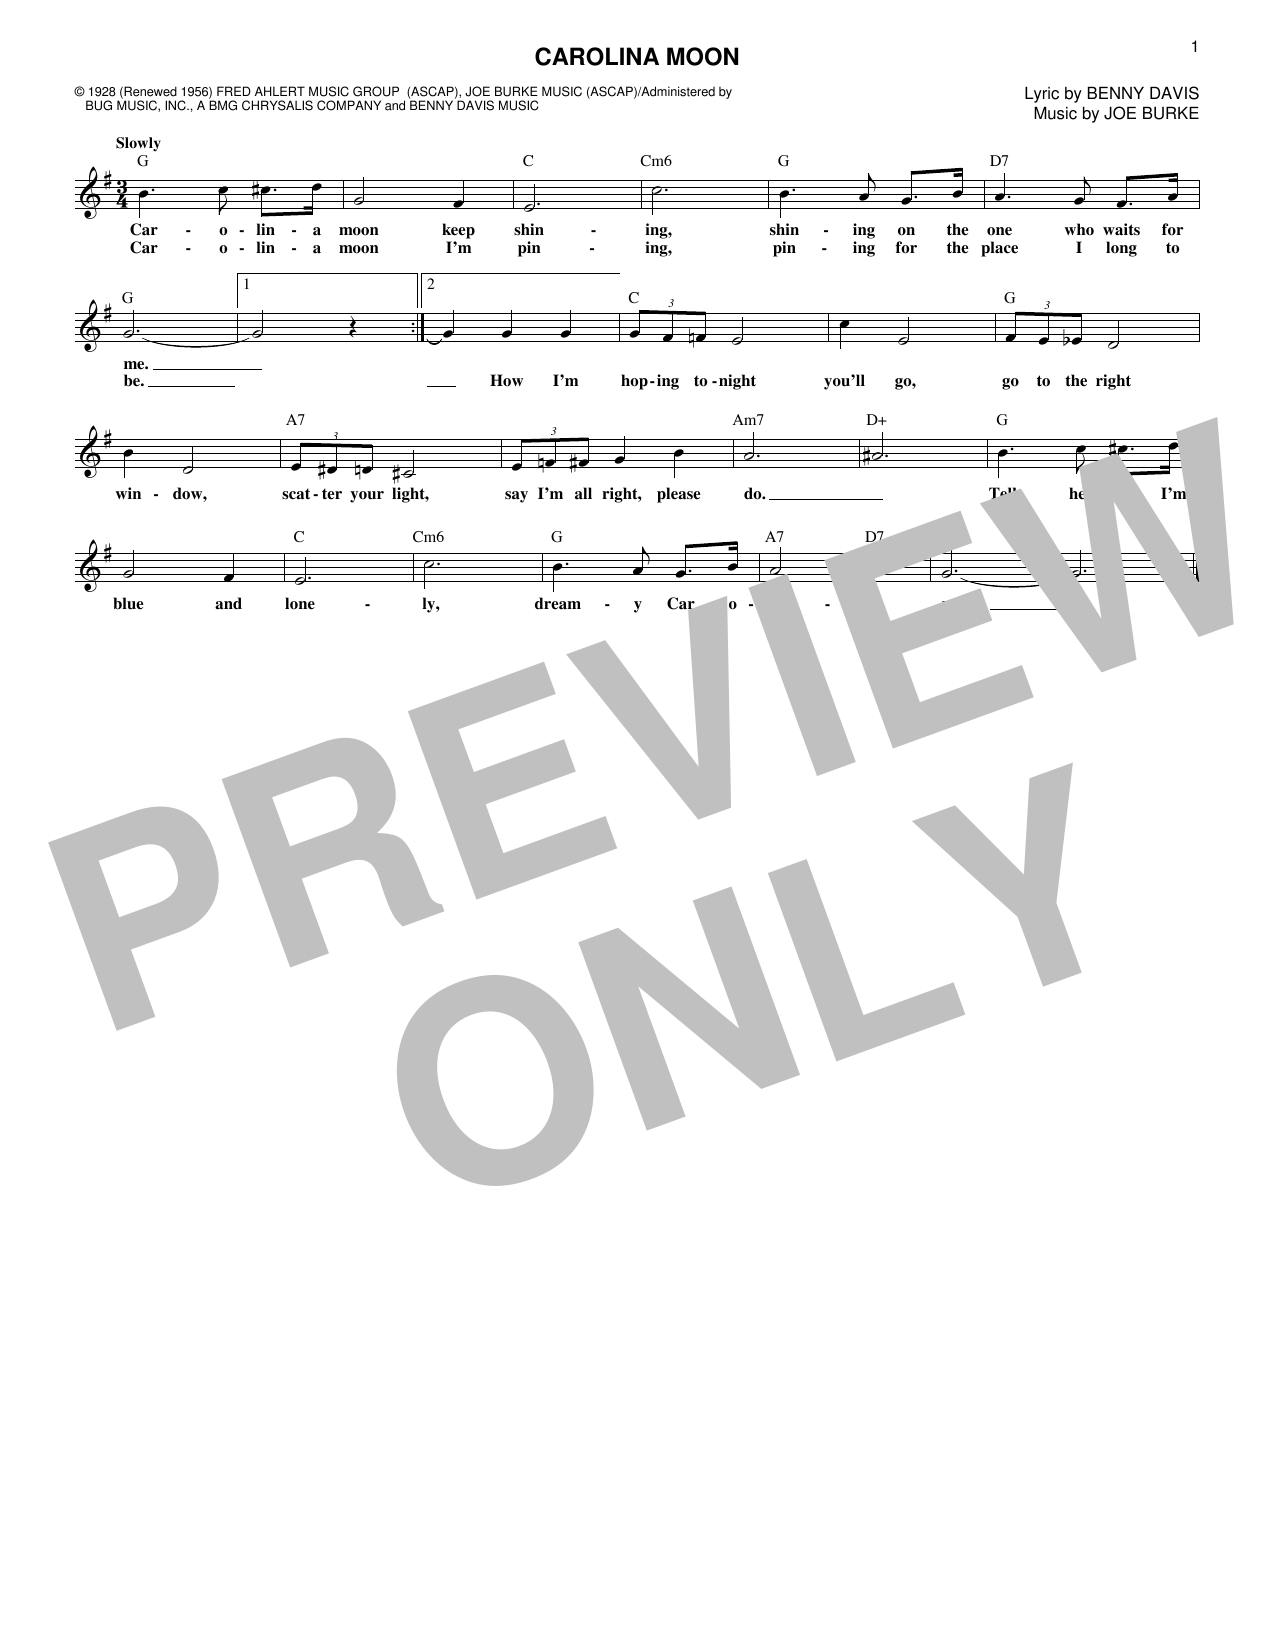 Joe Burke Carolina Moon Sheet Music Notes & Chords for Melody Line, Lyrics & Chords - Download or Print PDF